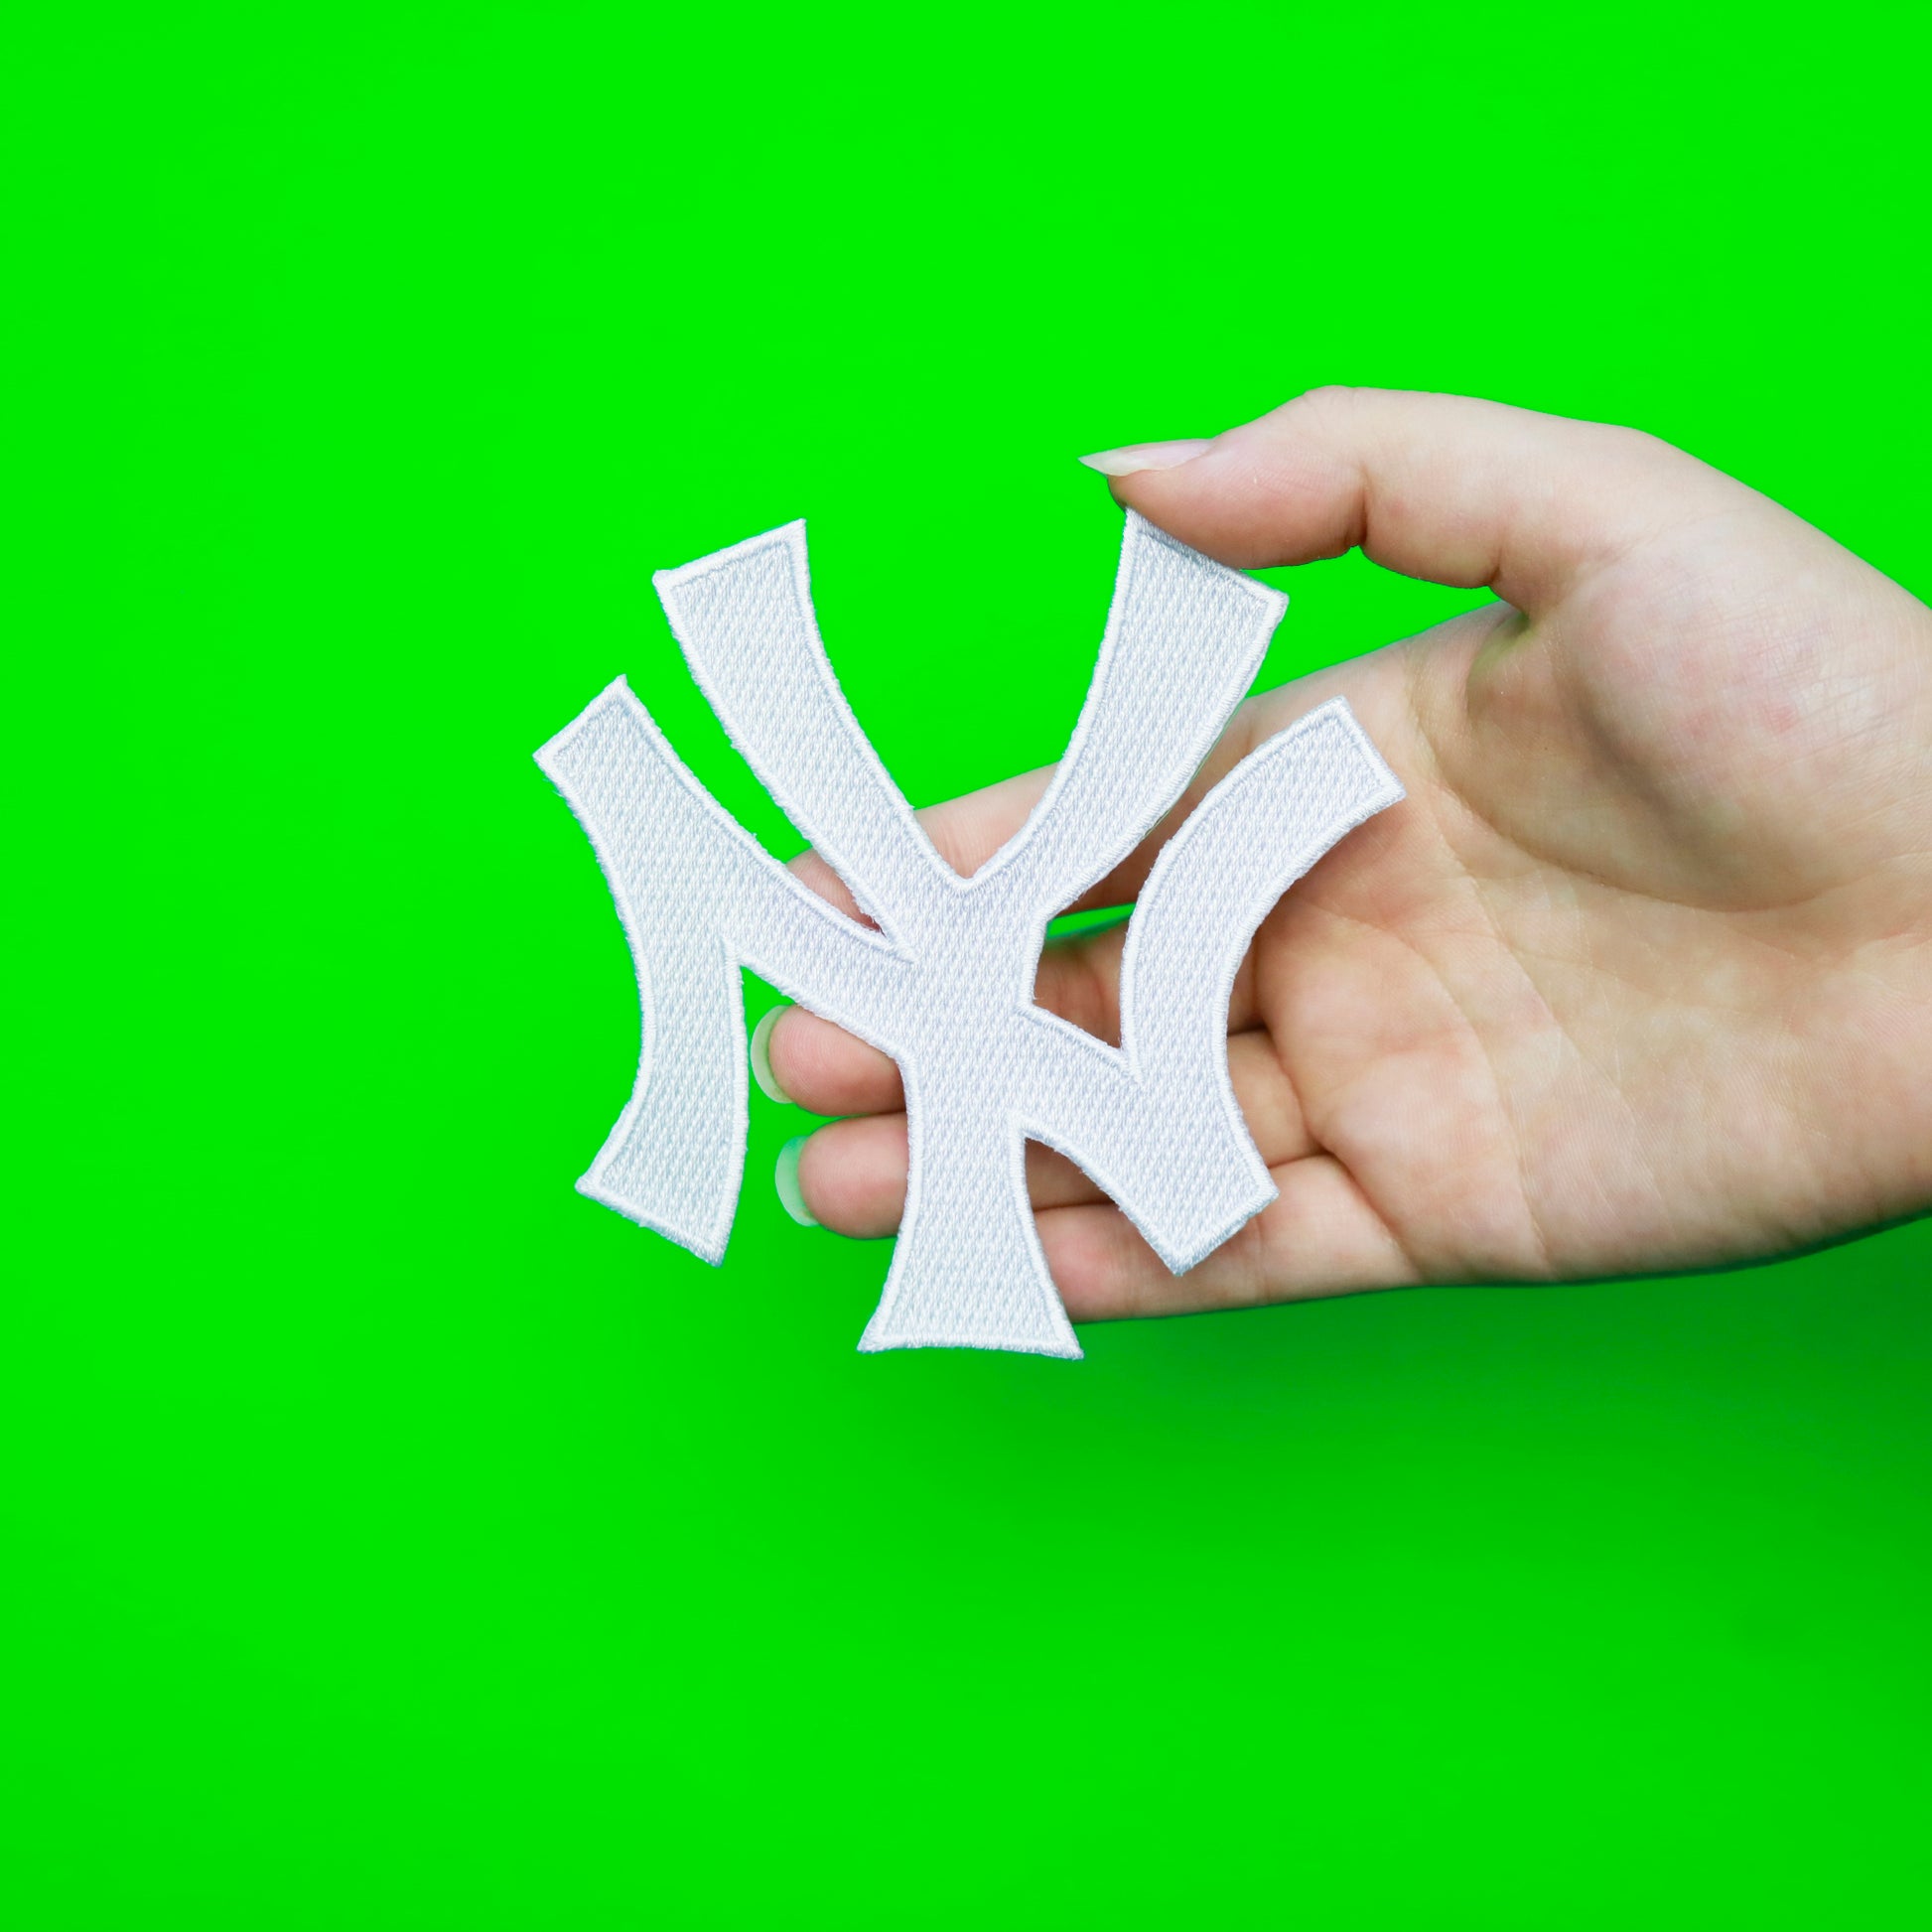 New York Yankees "NY" White Logo Patch 